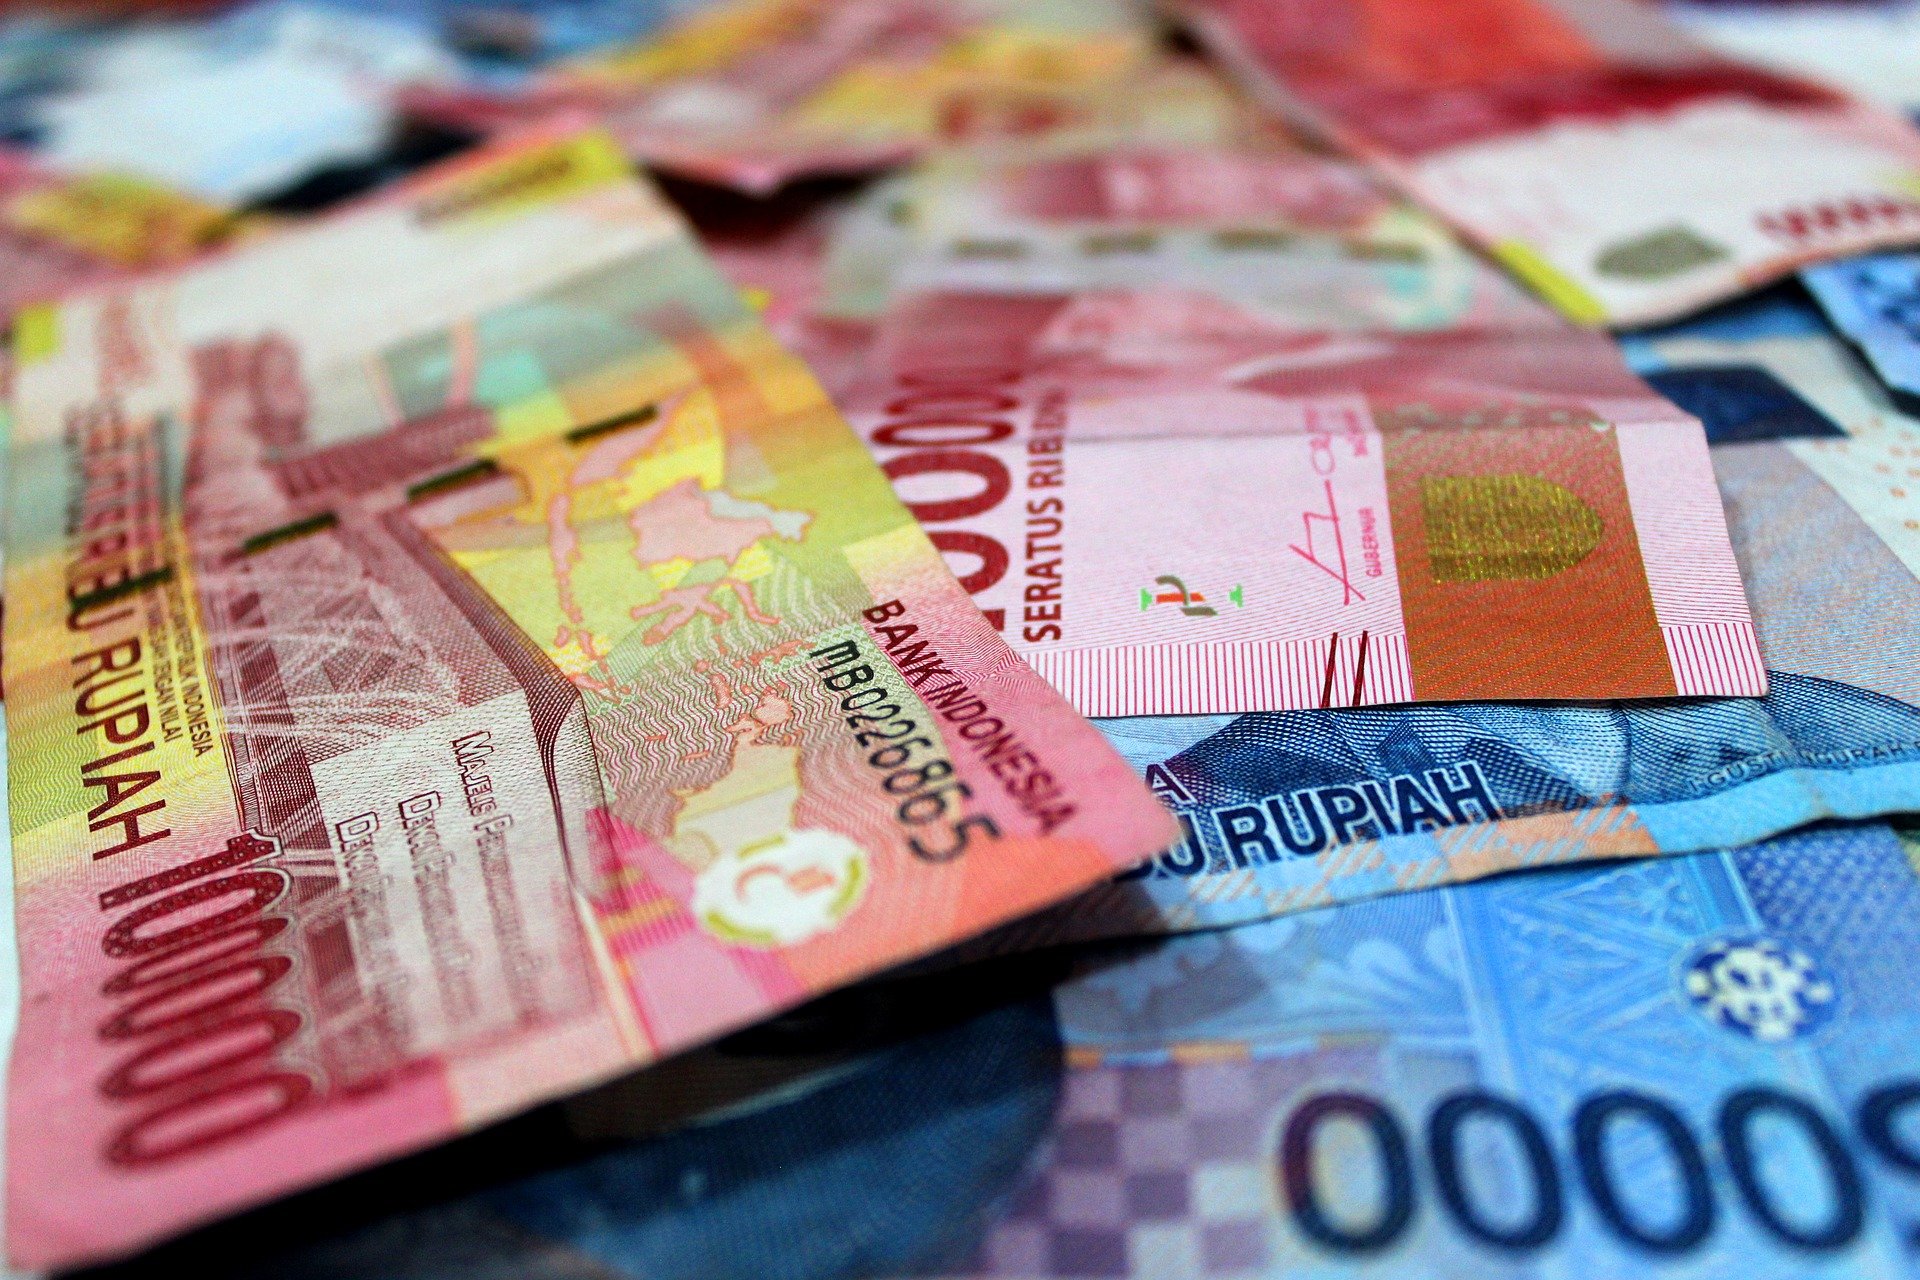 basic indonesian phrases - rupiah banknotes